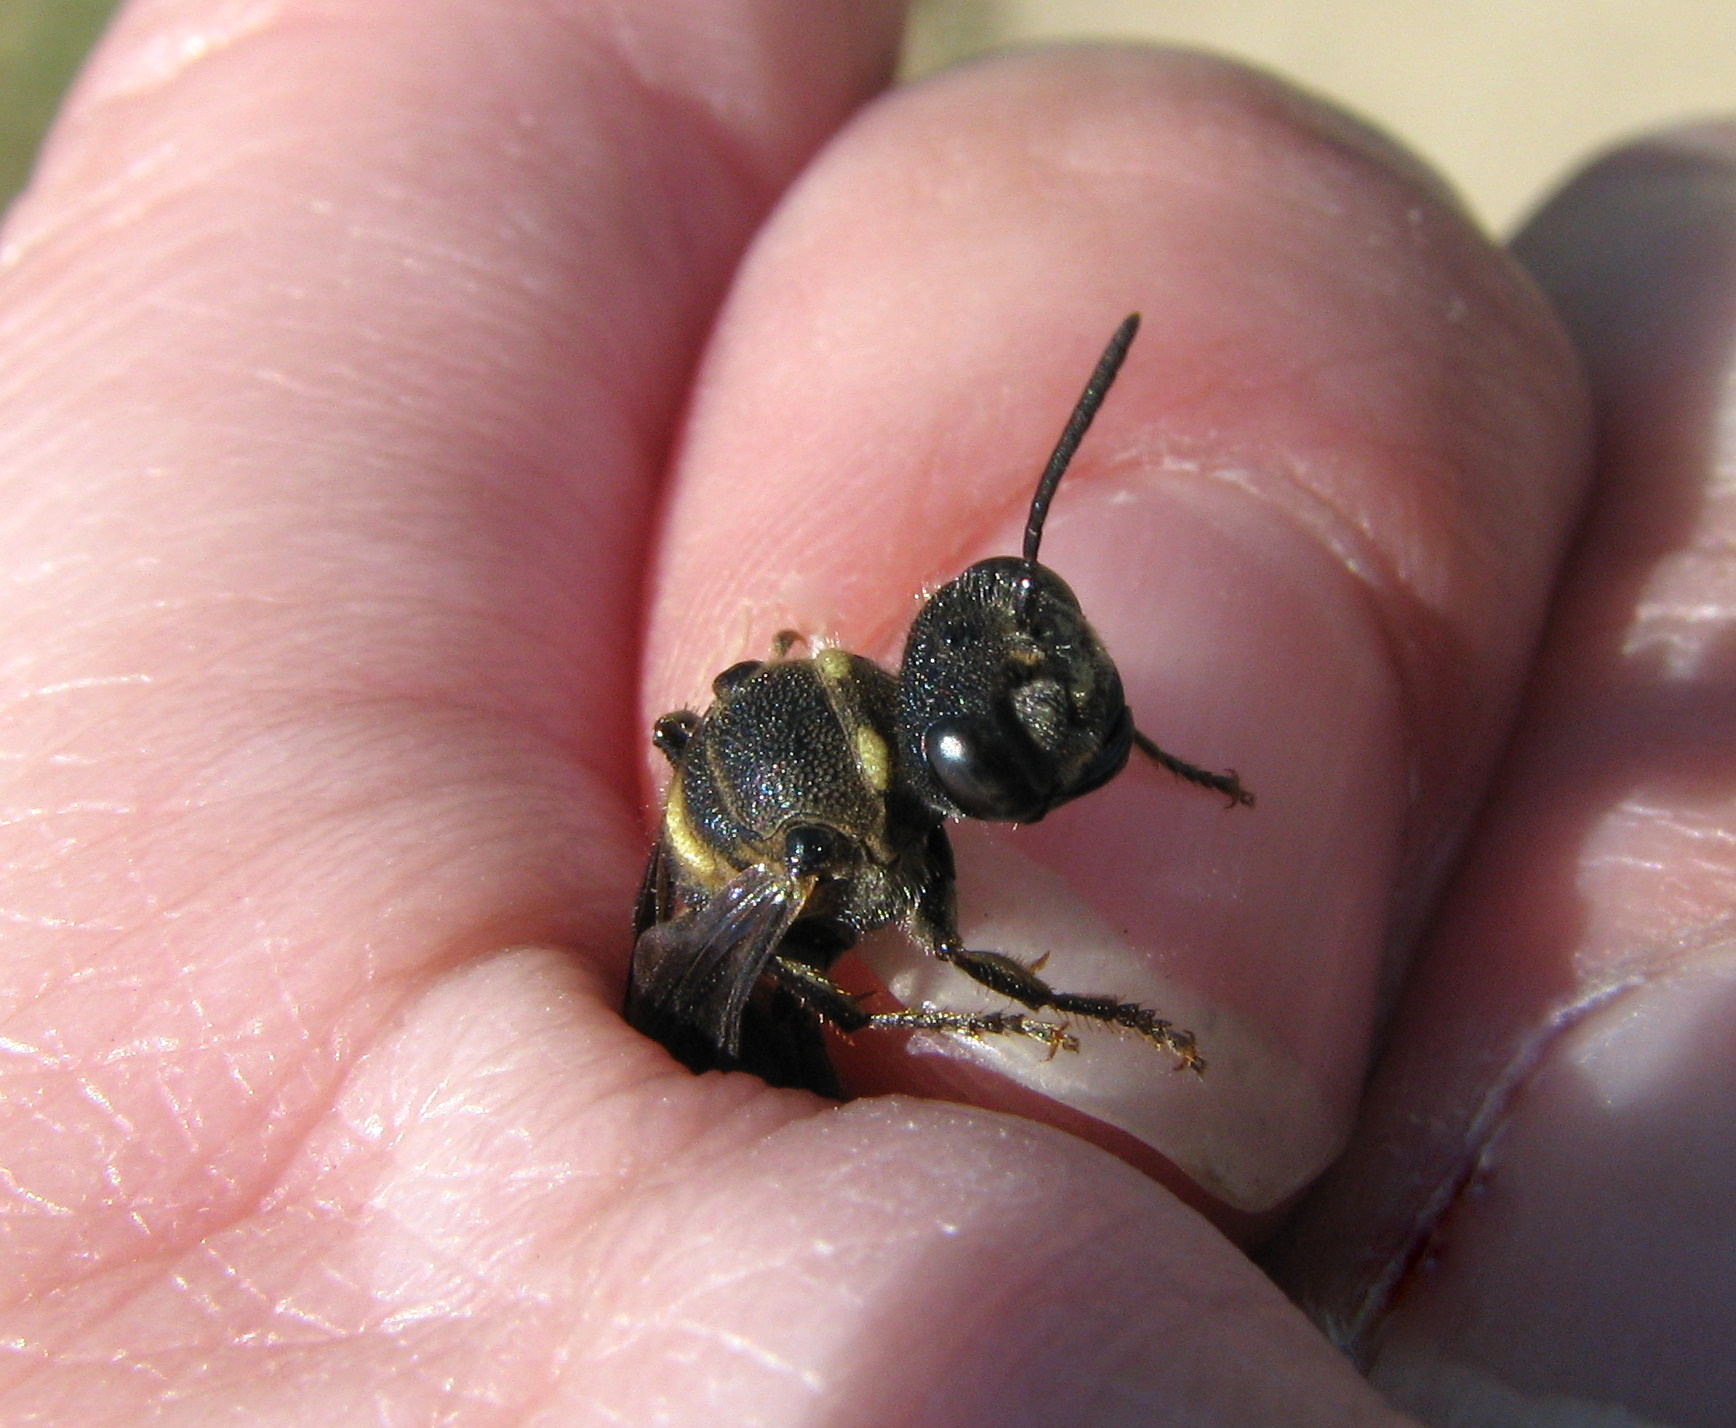 Cerceris wasp in hand